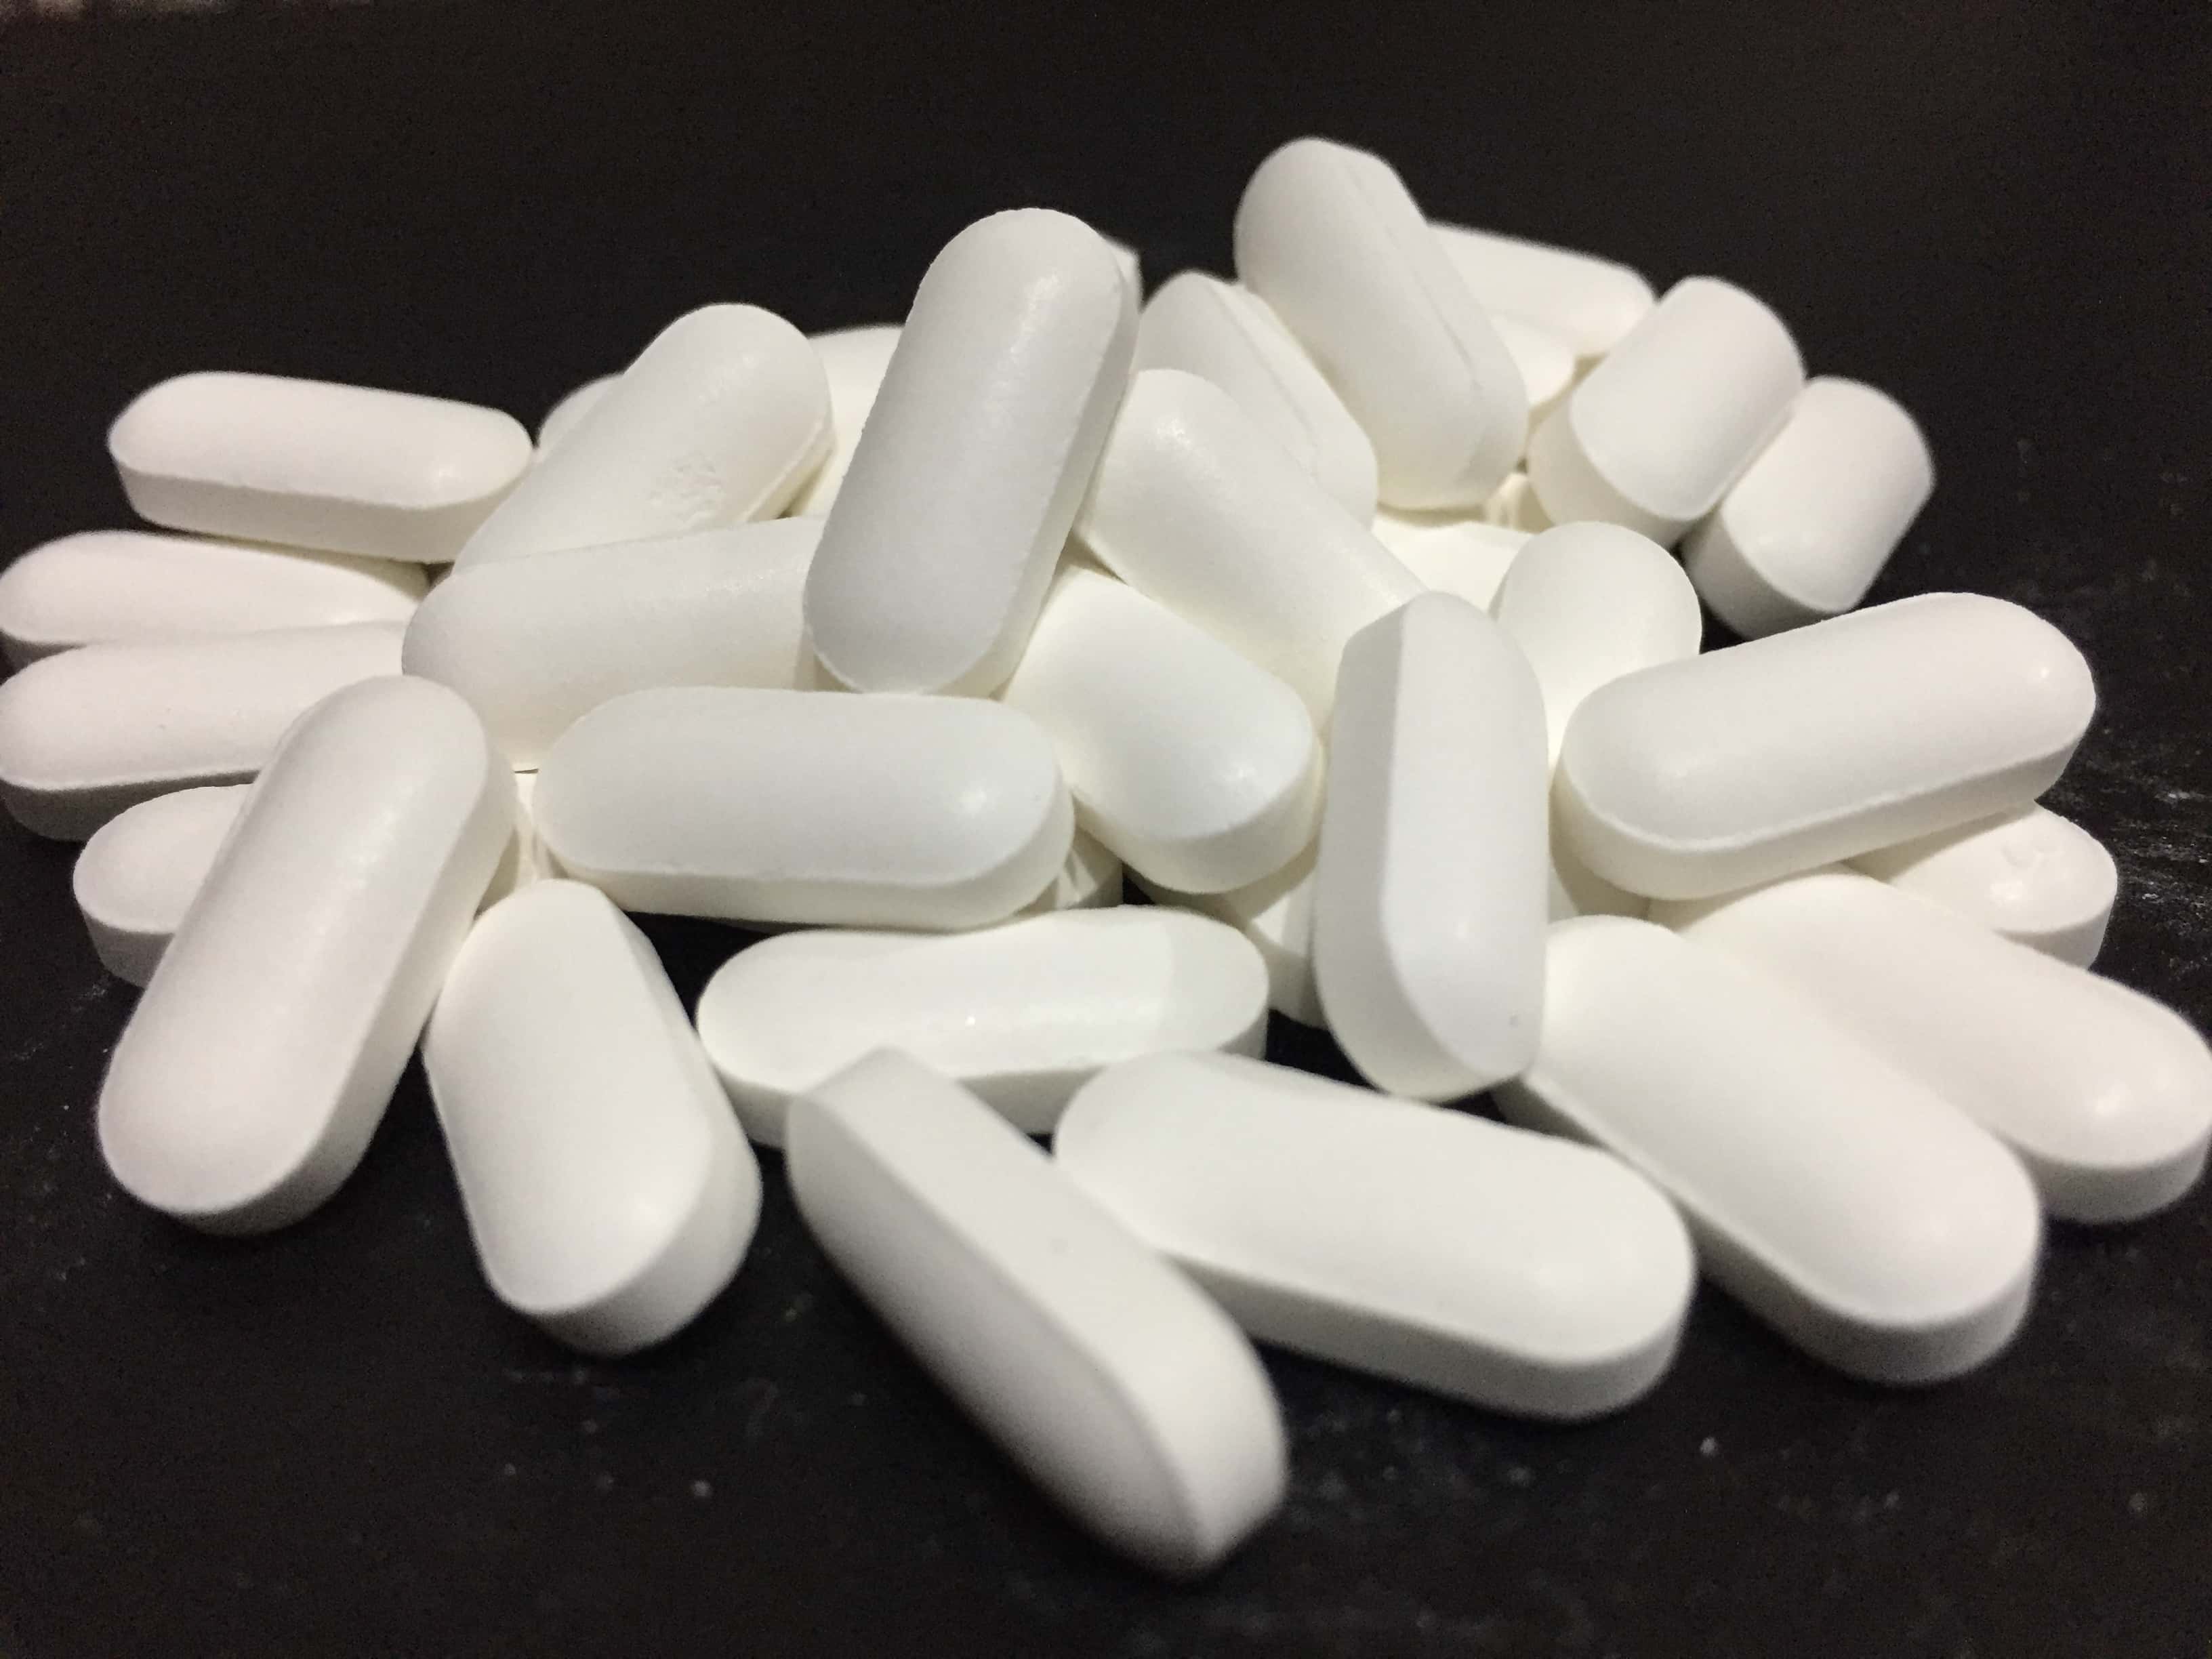 Pills Drugs Narcotics Opioids Pill Drug Prescription Prescriptions Pharmacy Pharmacist Addiction